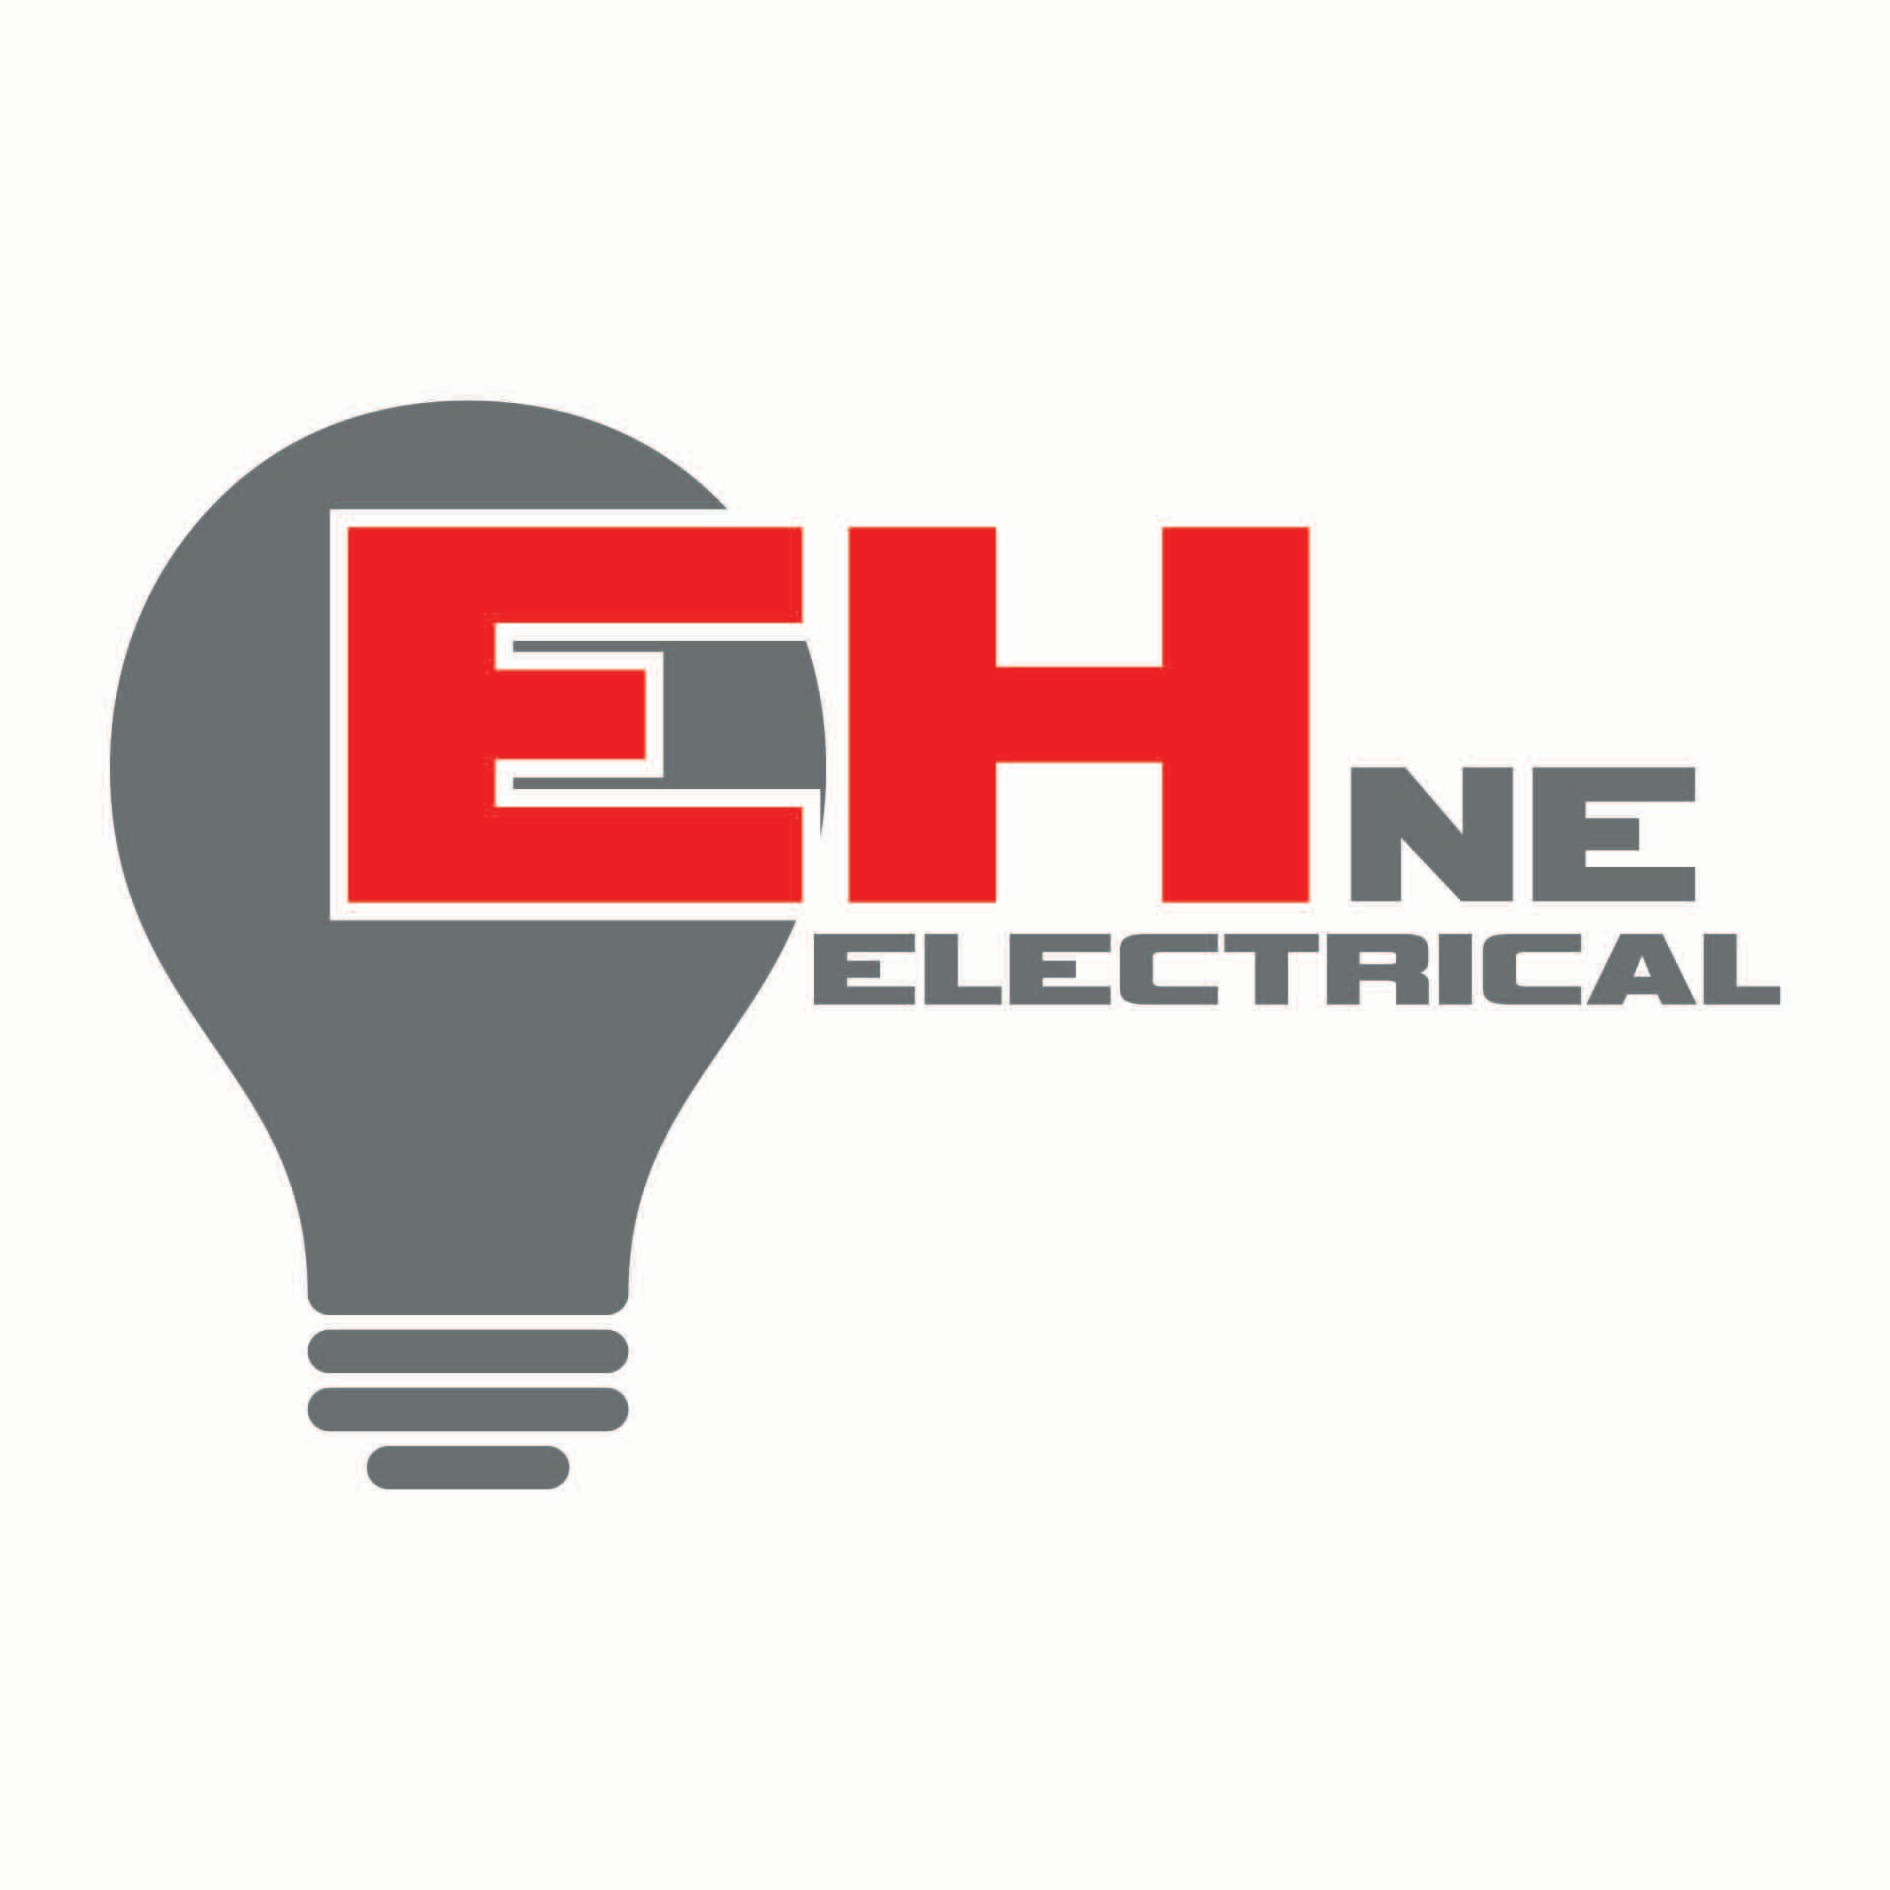 E. H. Electrical (NE)